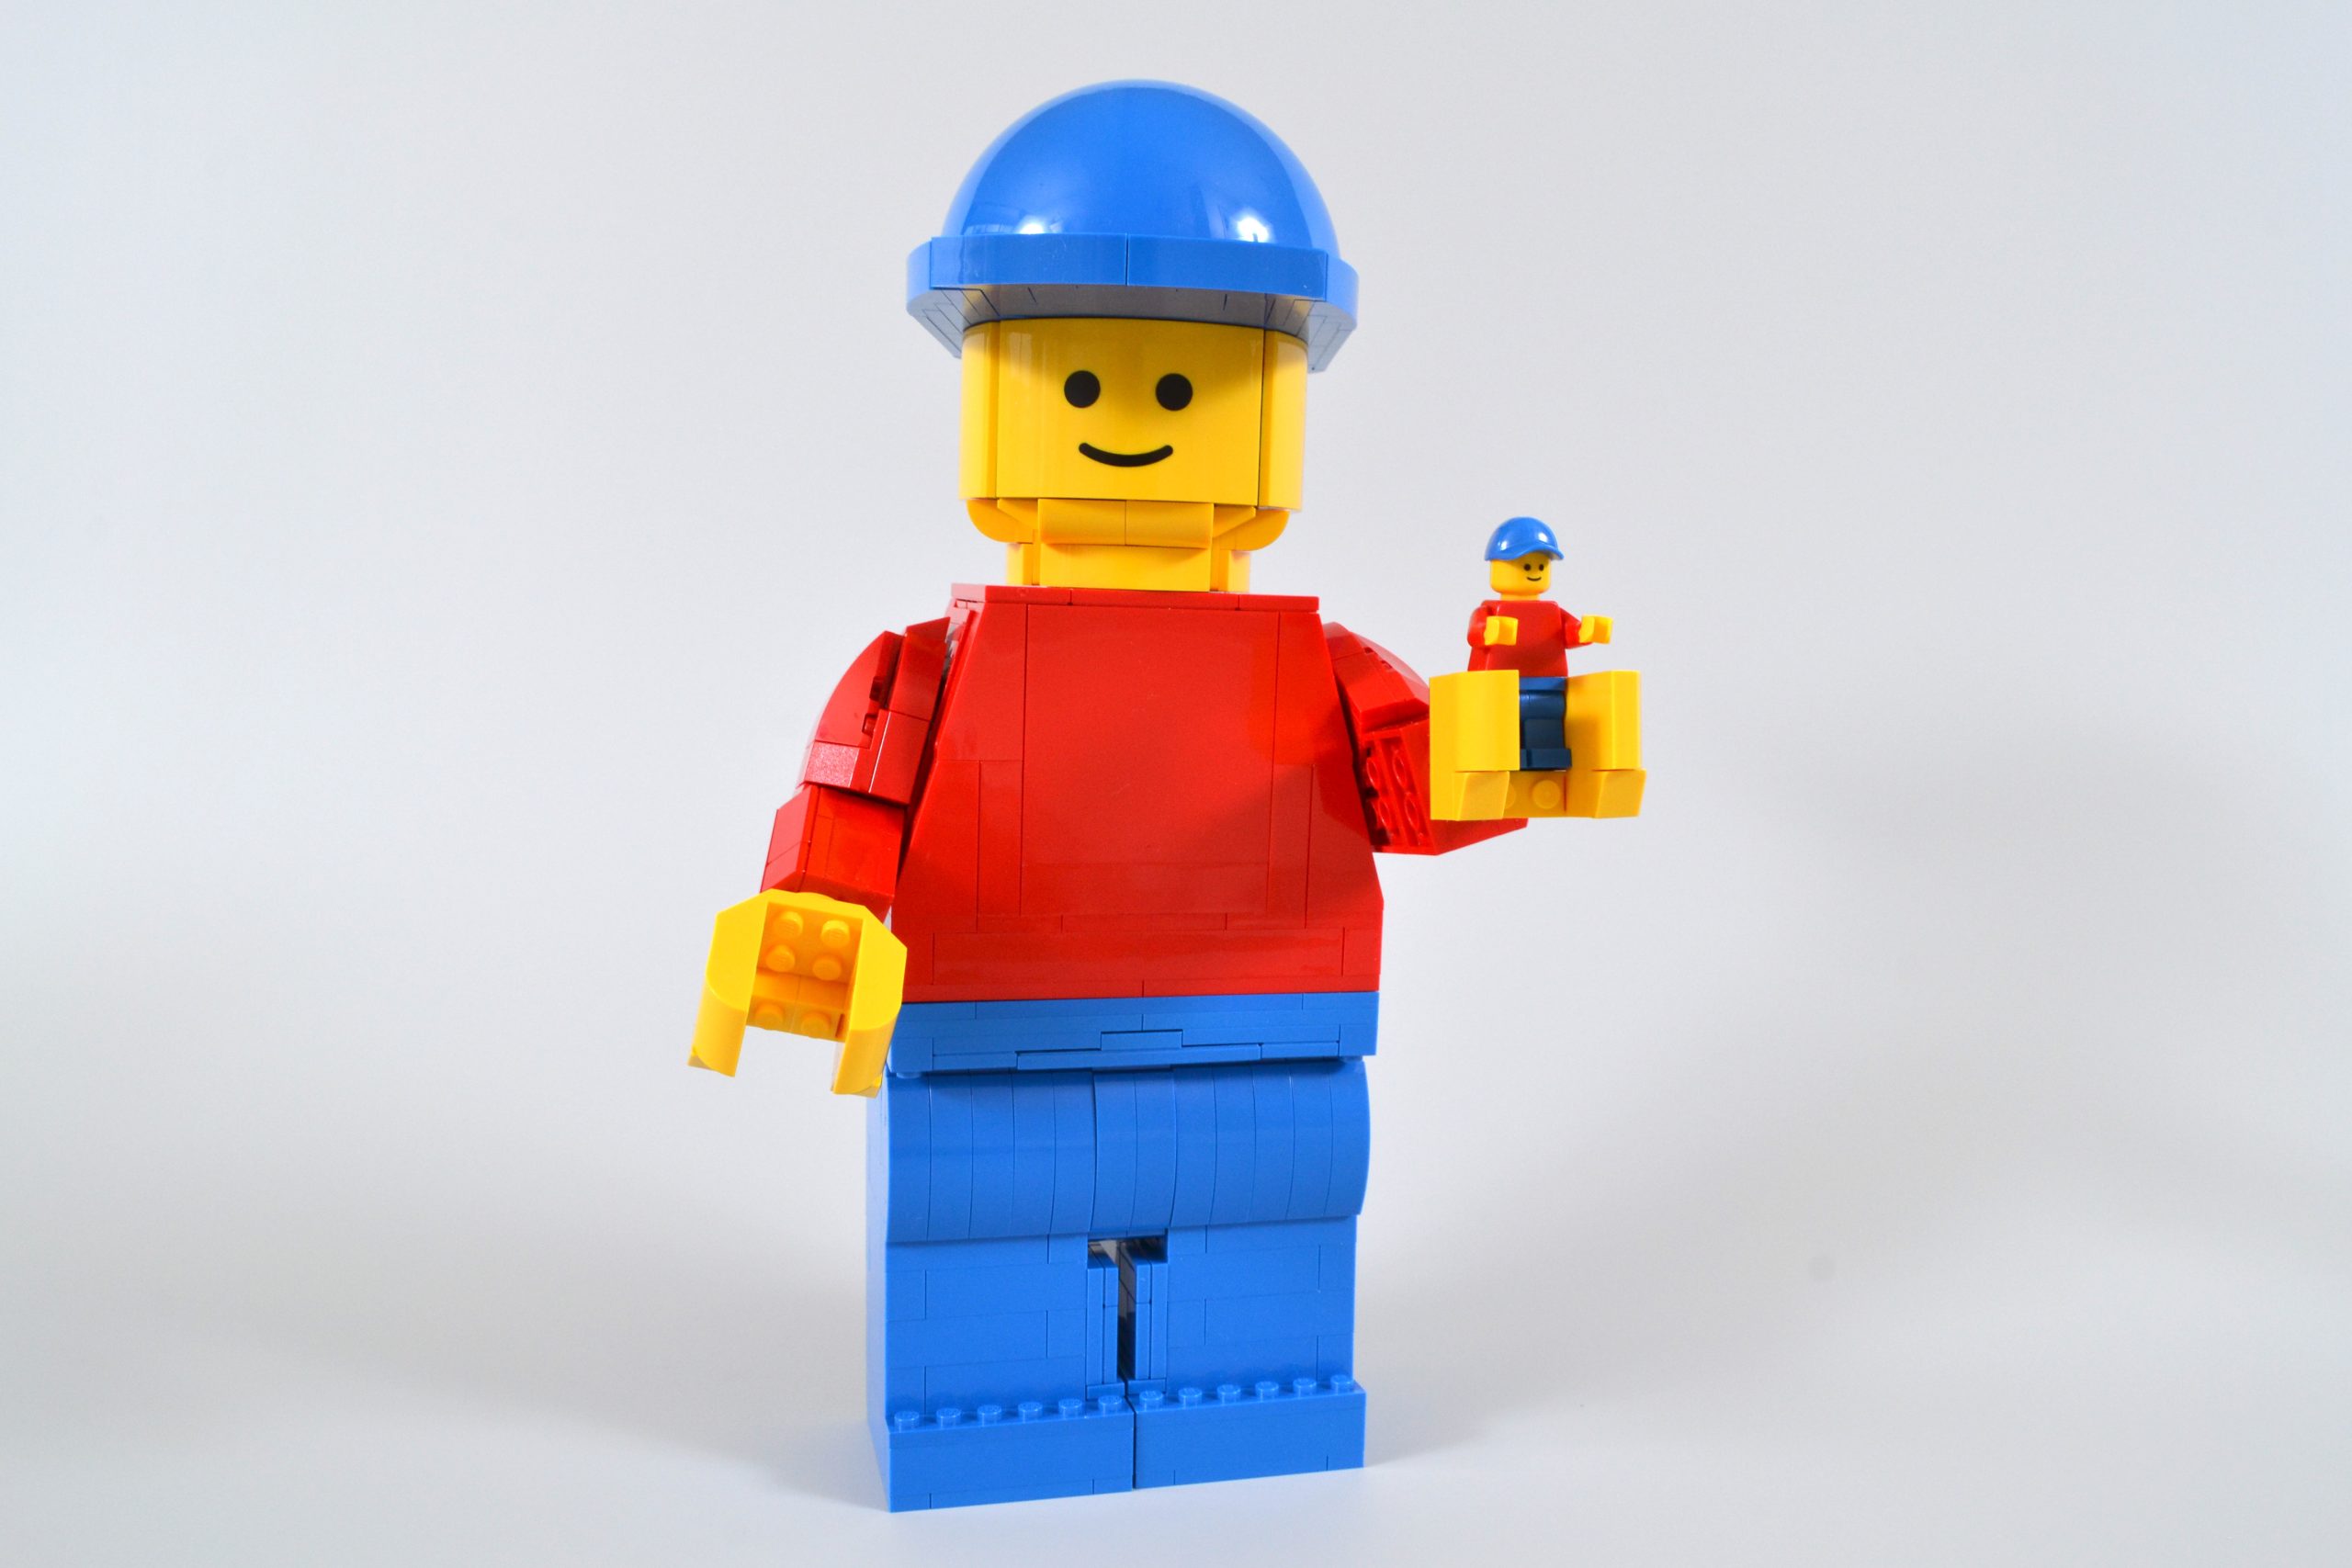 Minifigurine Lego grand format - Set 40649 [Avis et Notes]